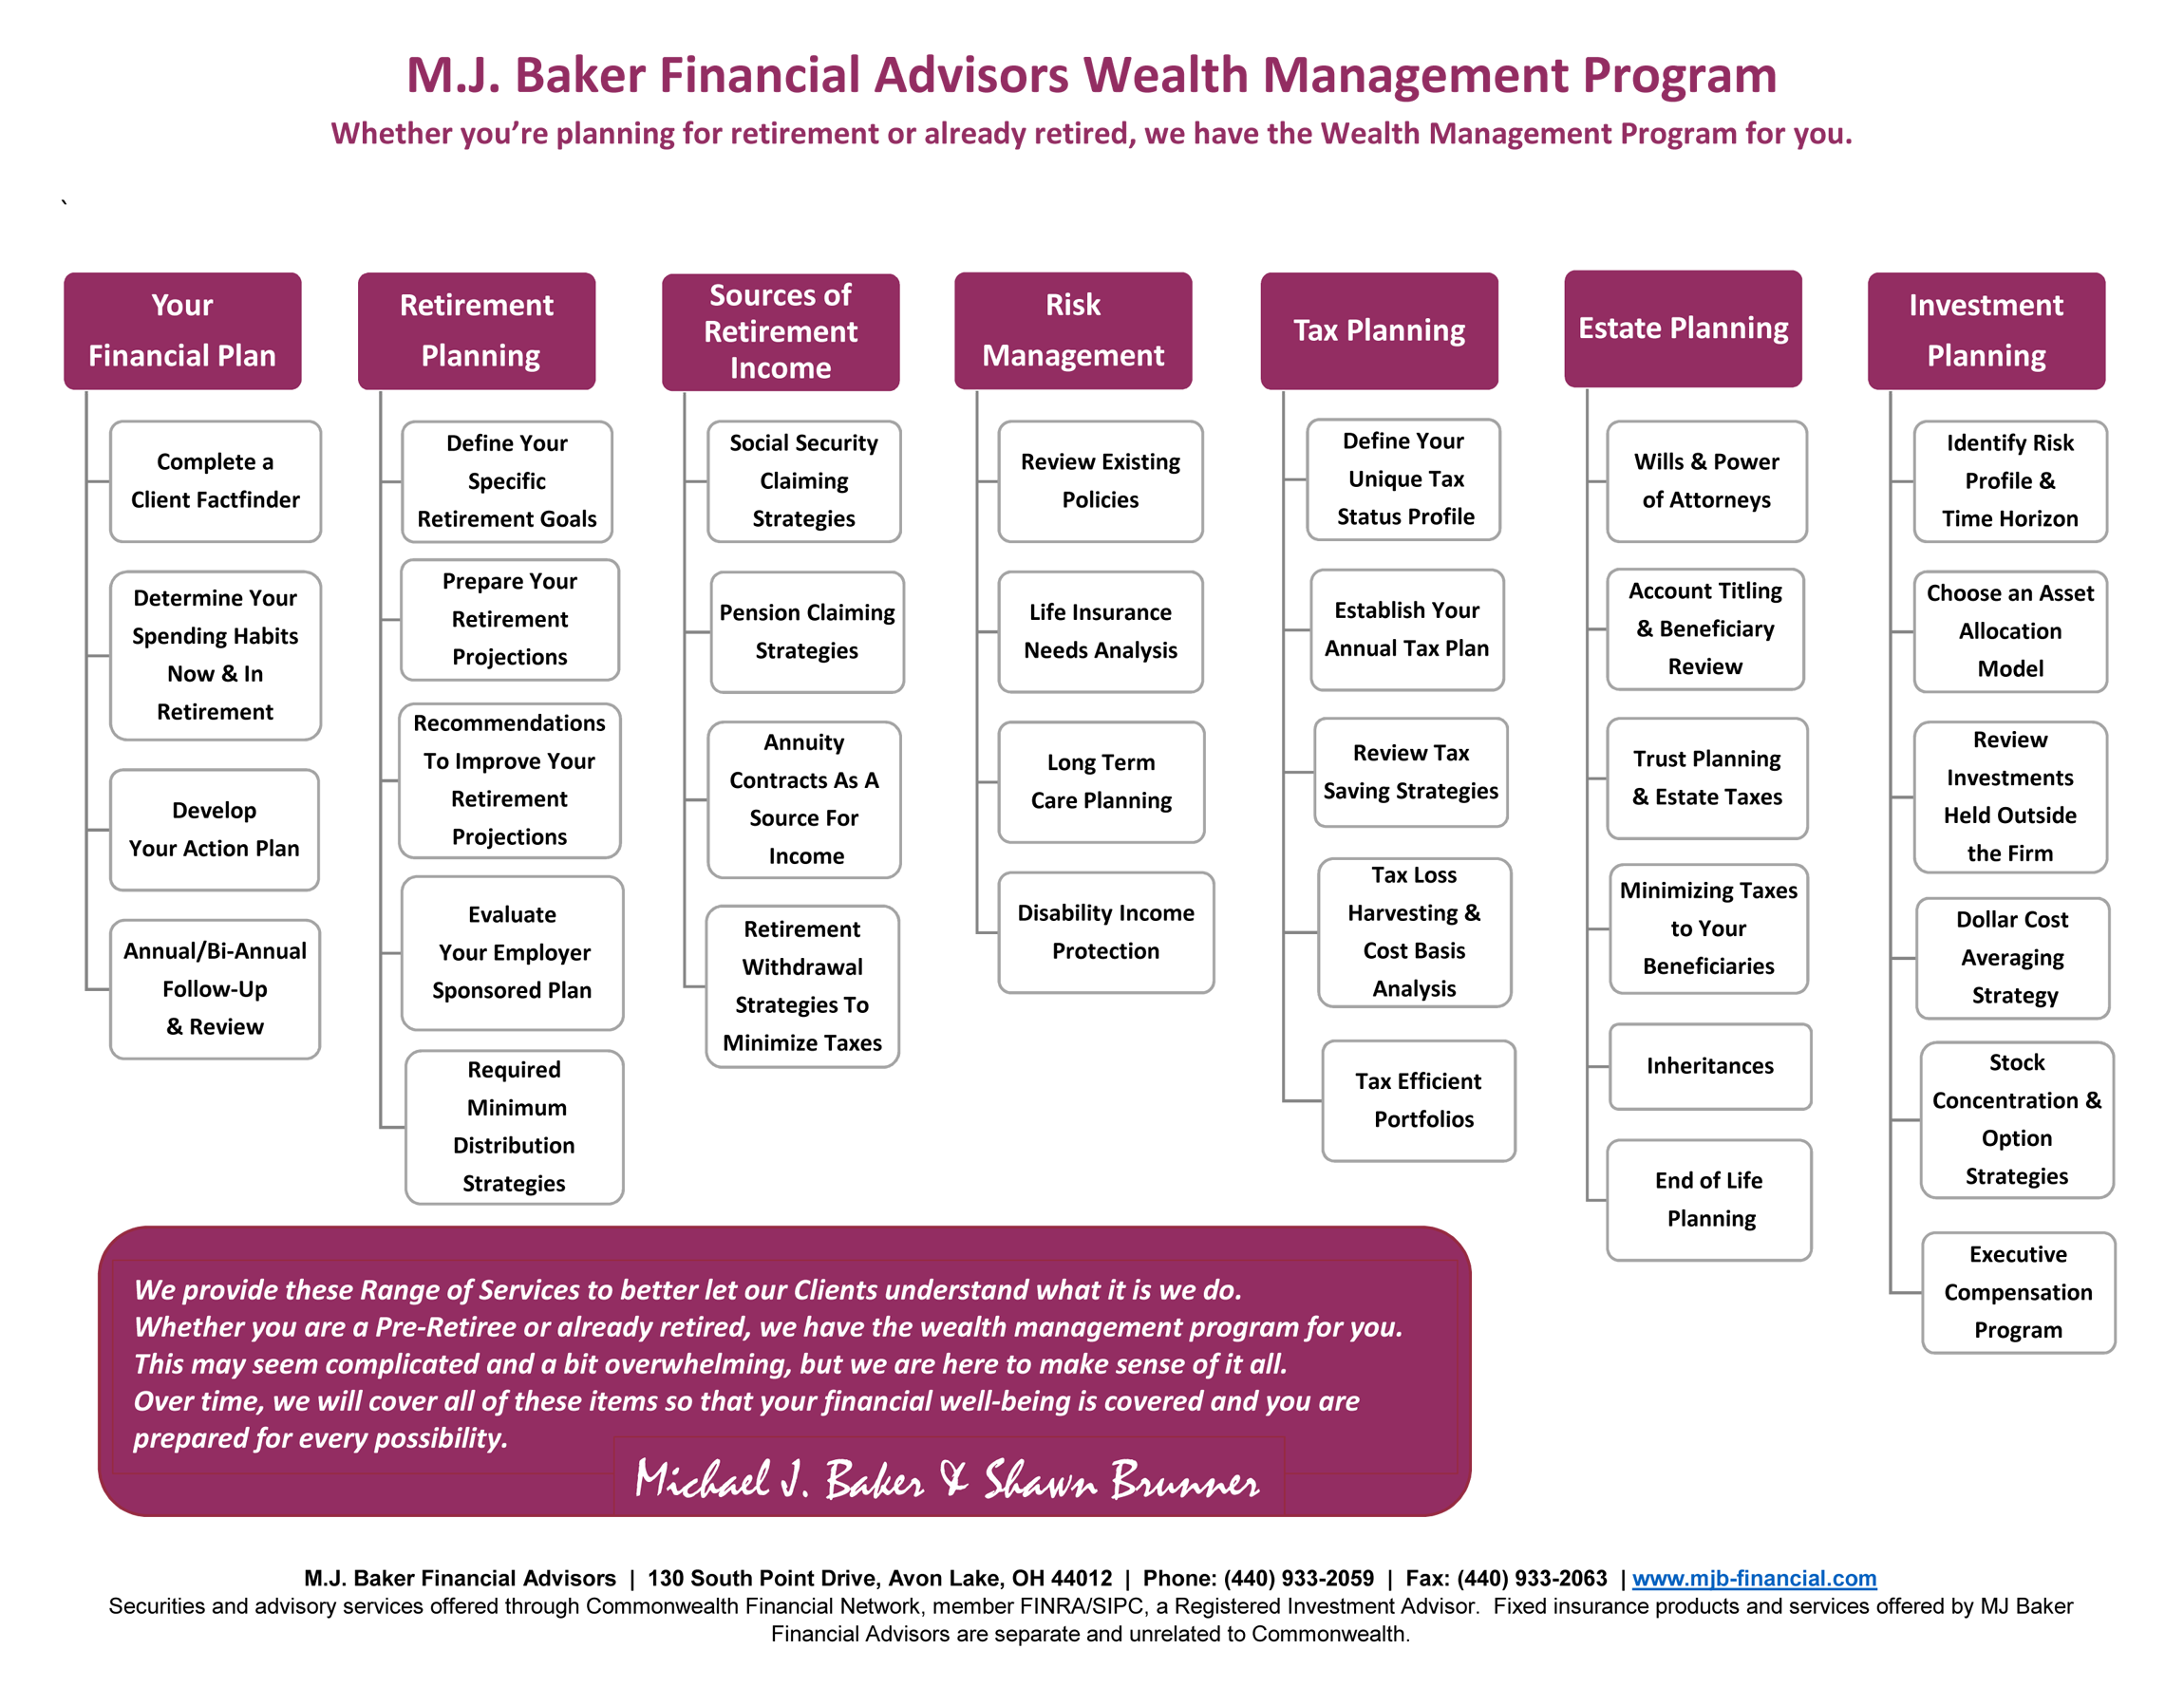 Your-Wealth-Management-Program-2019